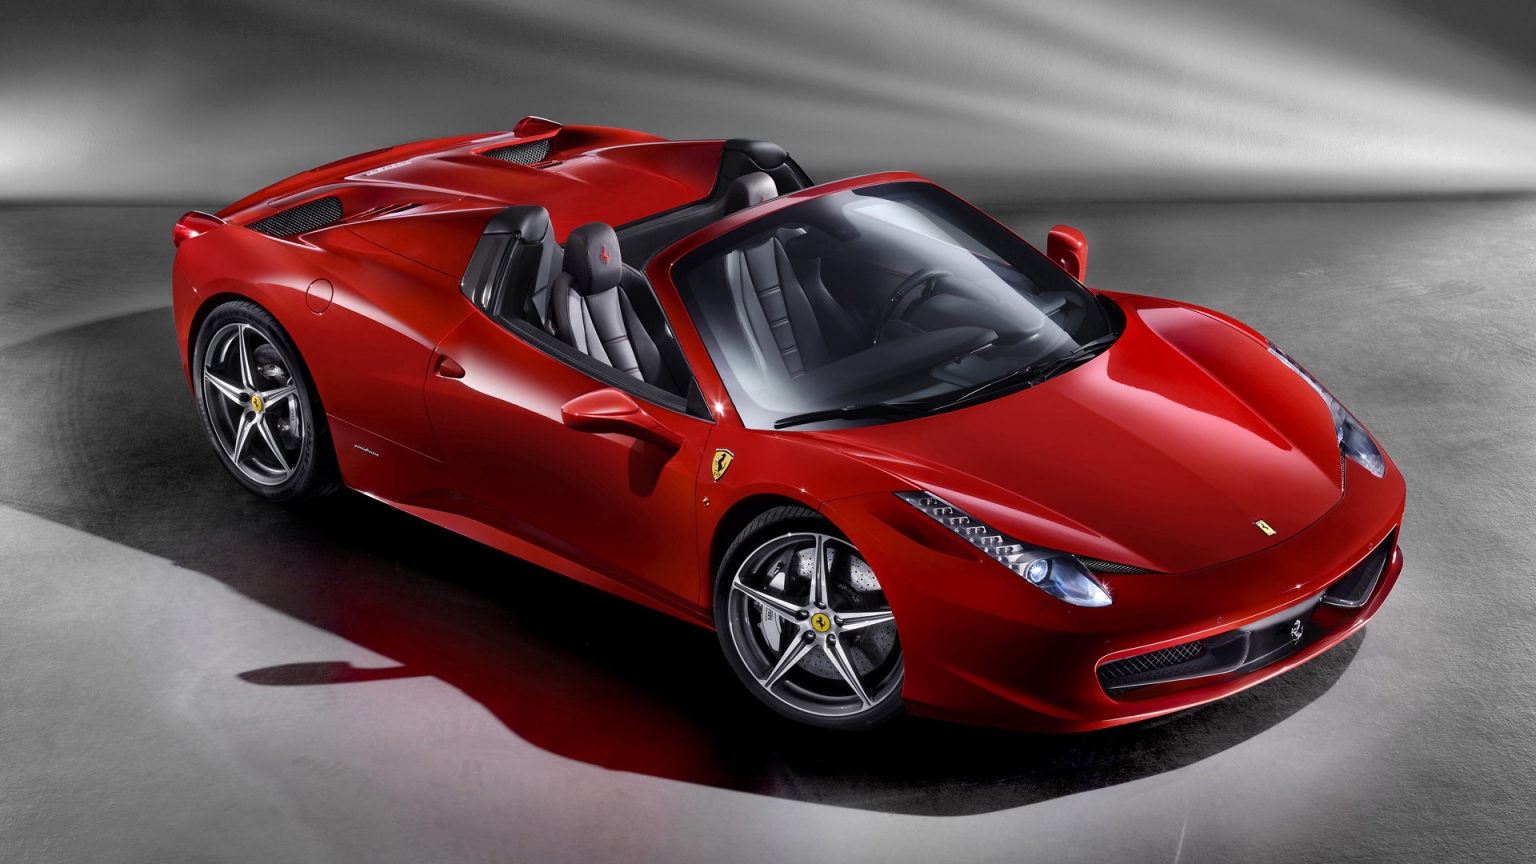 2012 Ferrari 458 Spider Studio for 1536 x 864 HDTV resolution